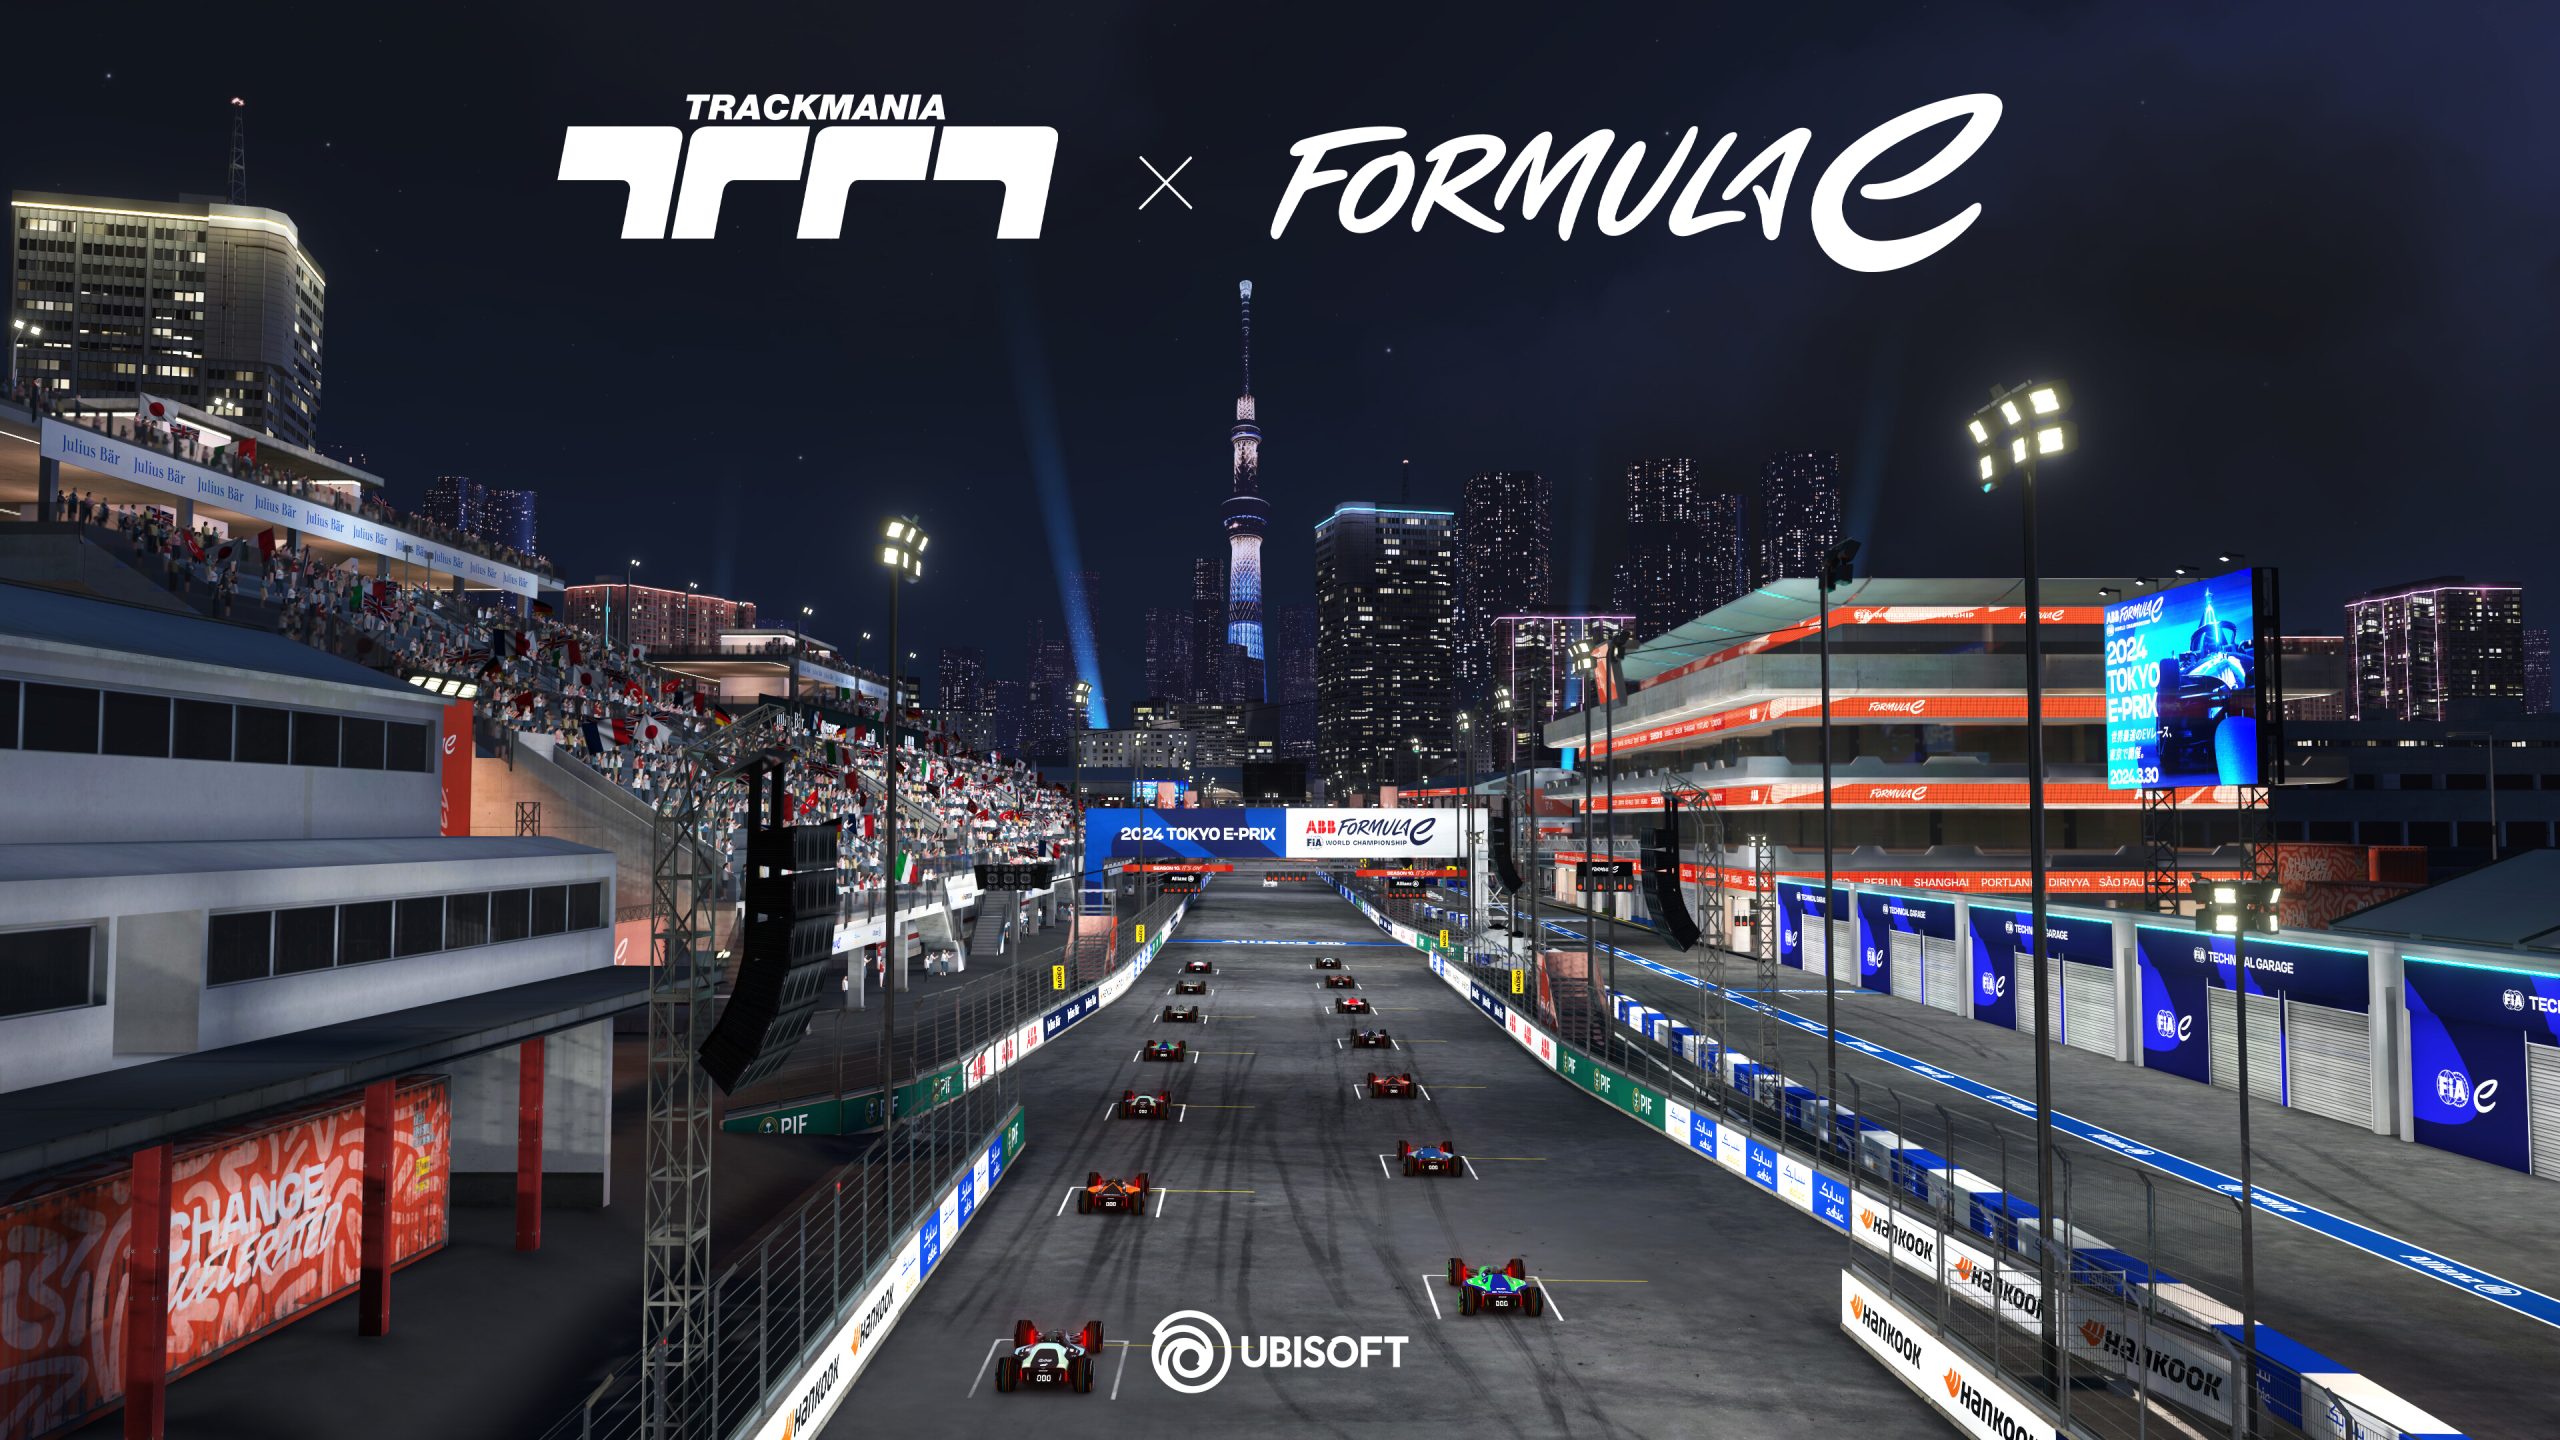 Formula E Event comes to Trackmania March 30